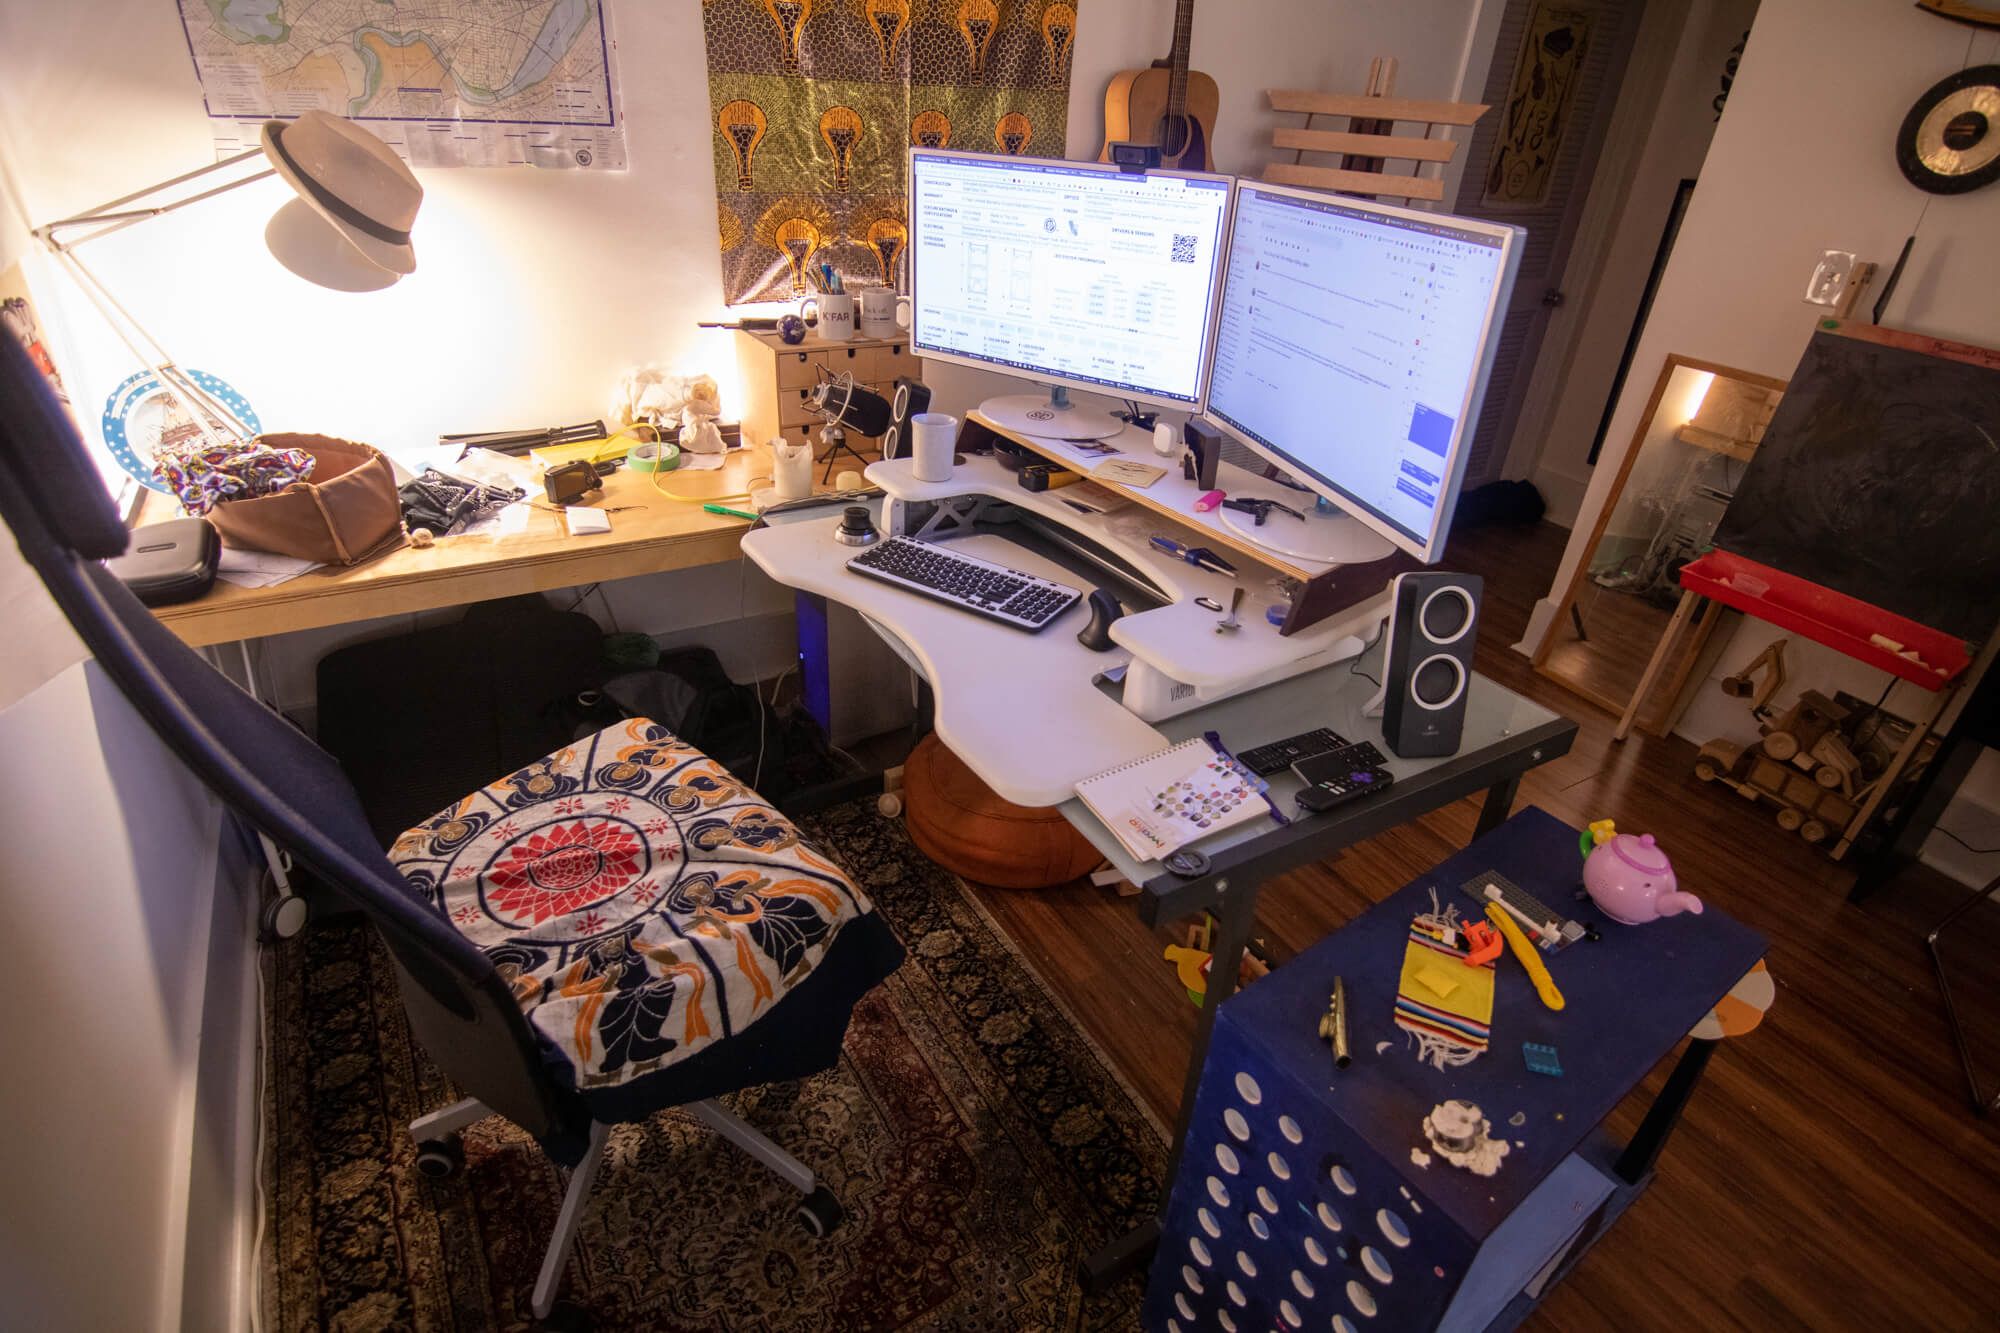 Dan's current home office setup